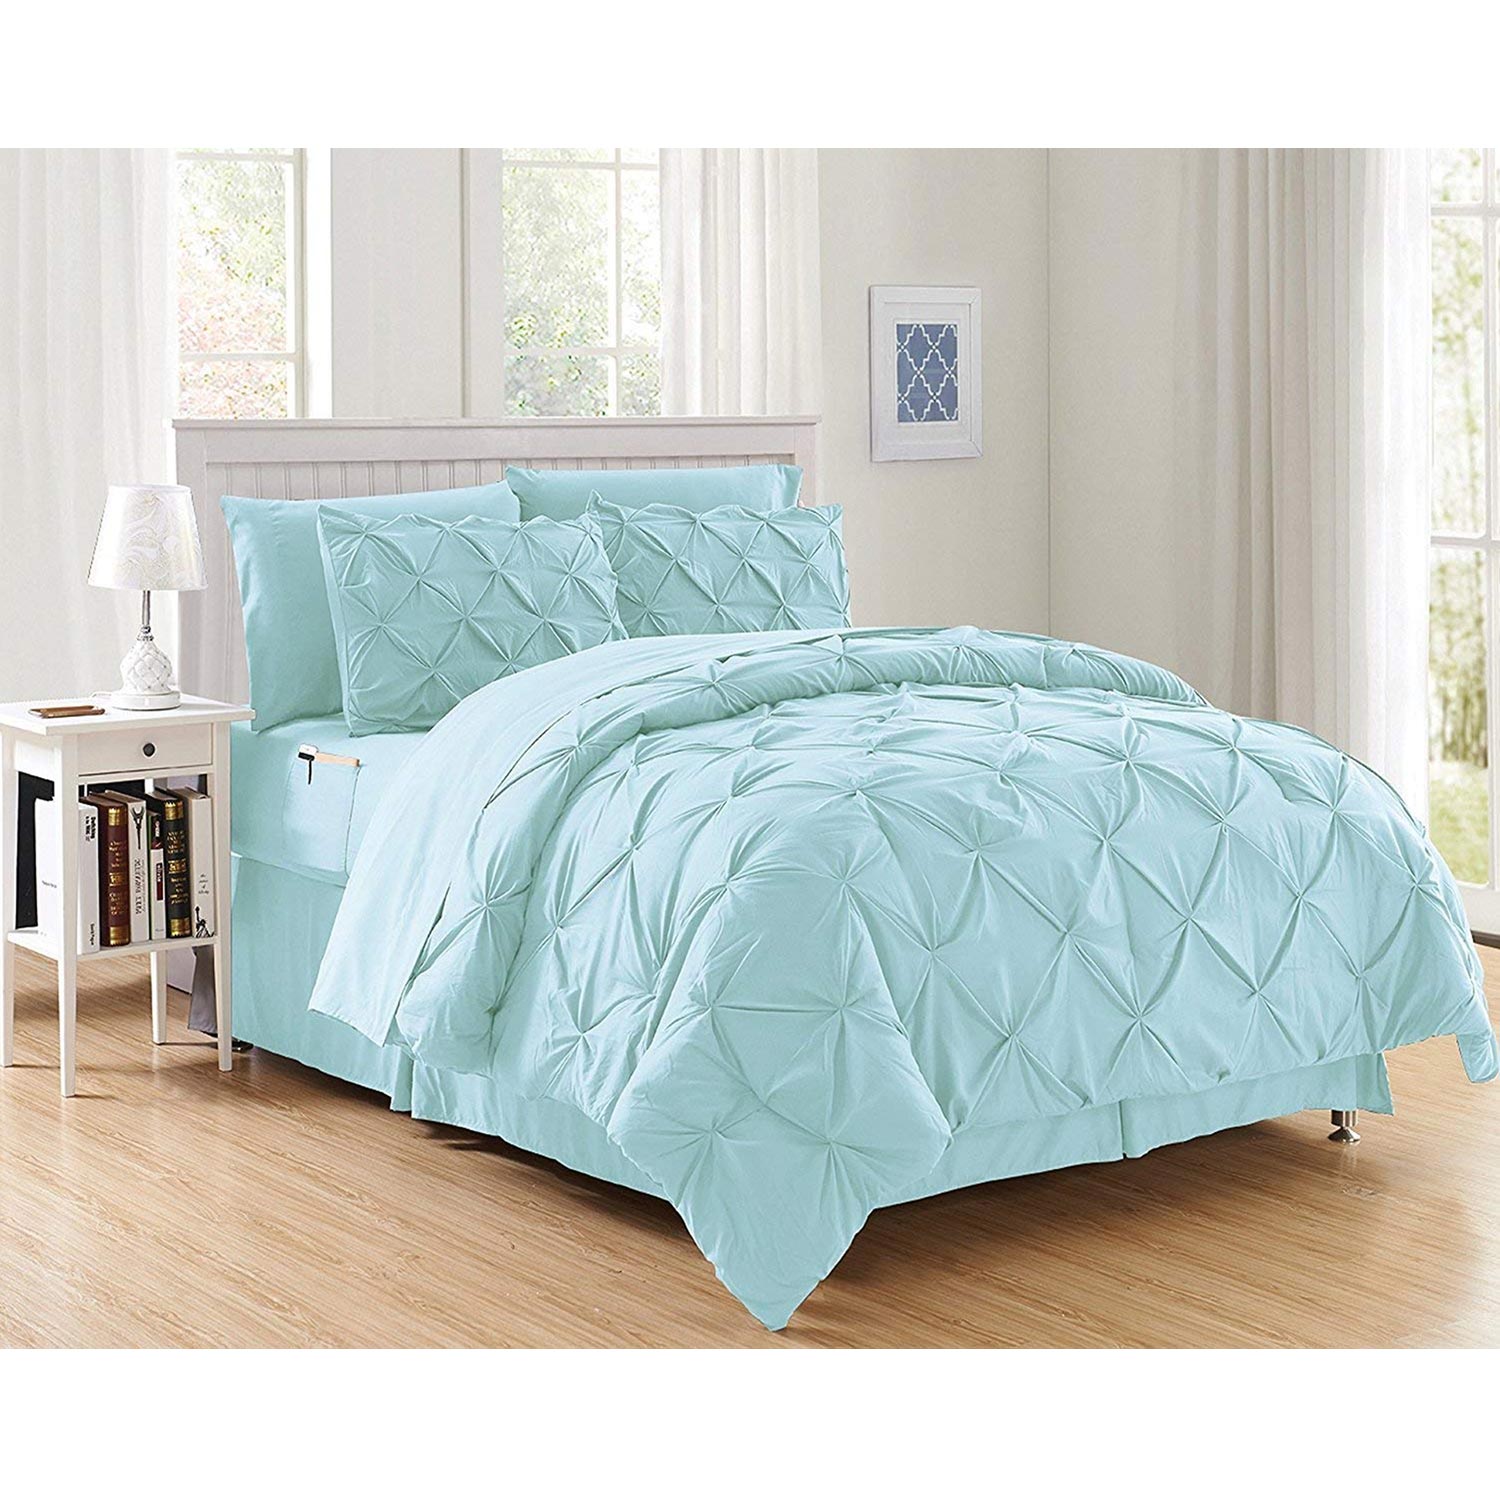 Luxury Best, Softest, Coziest 8-Piece Bed-in-a-Bag Comforter Set